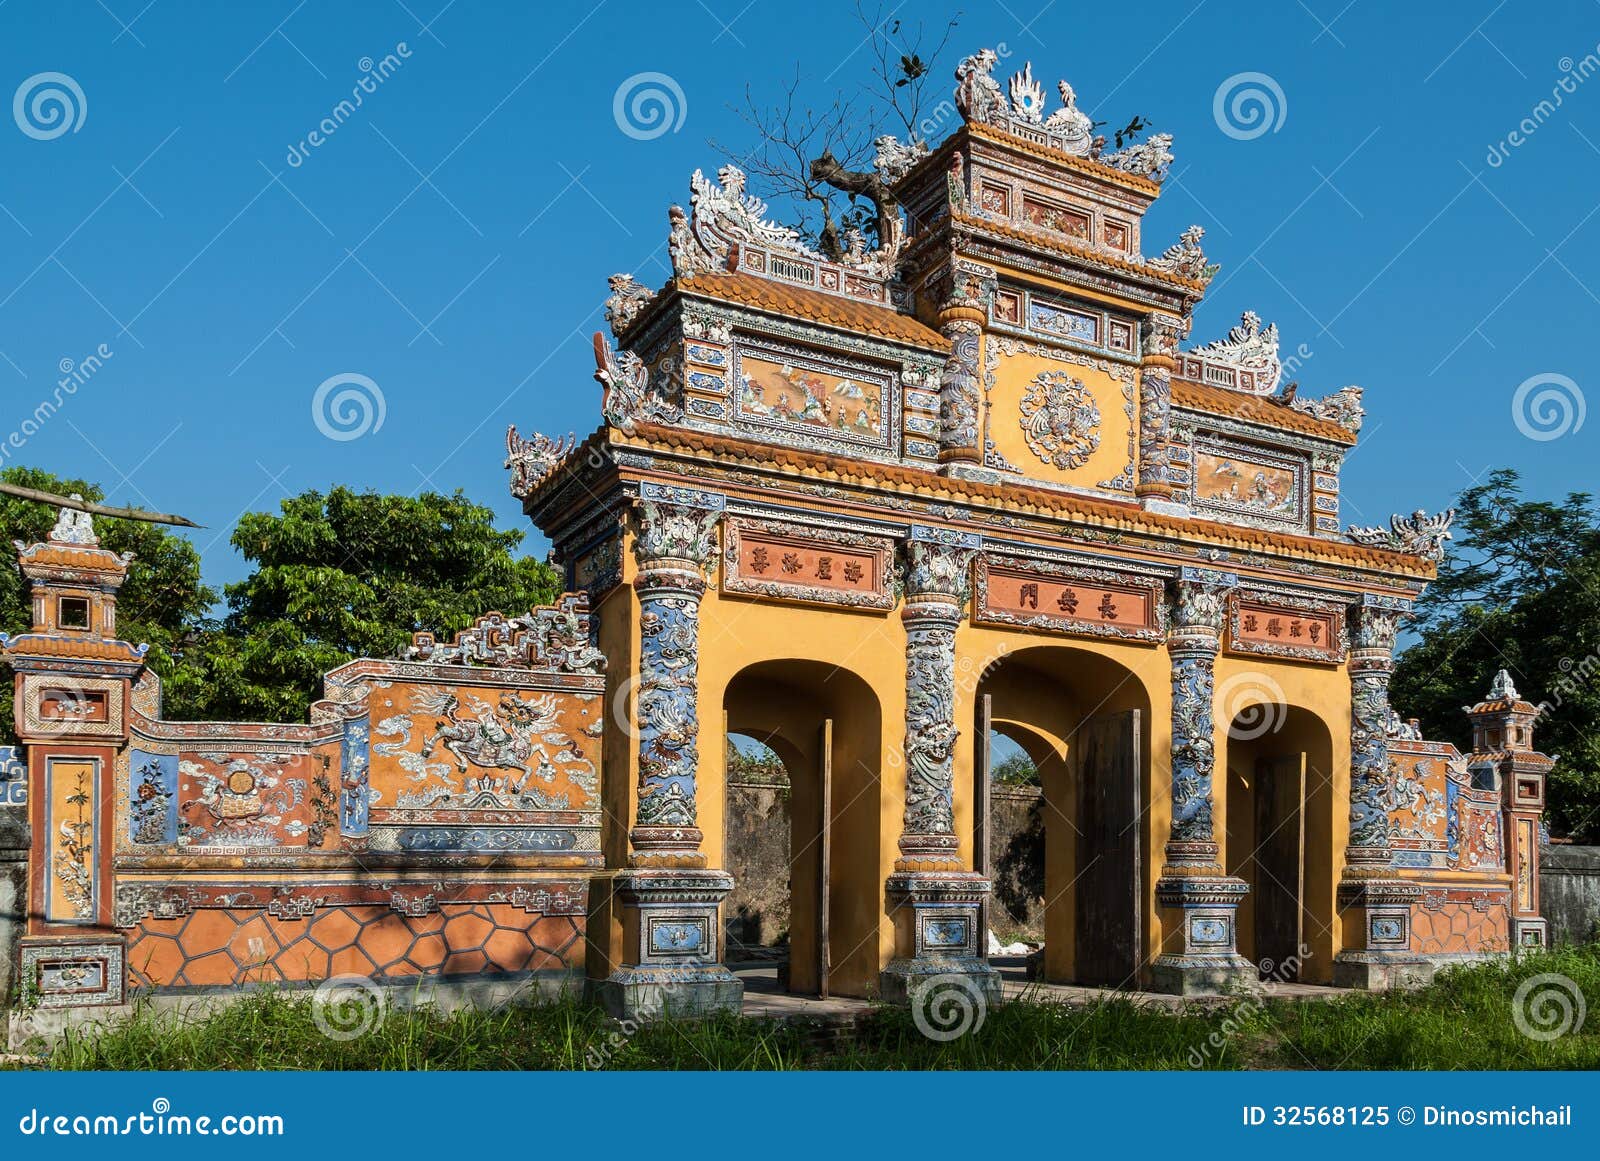 monuments of hue, vietnam